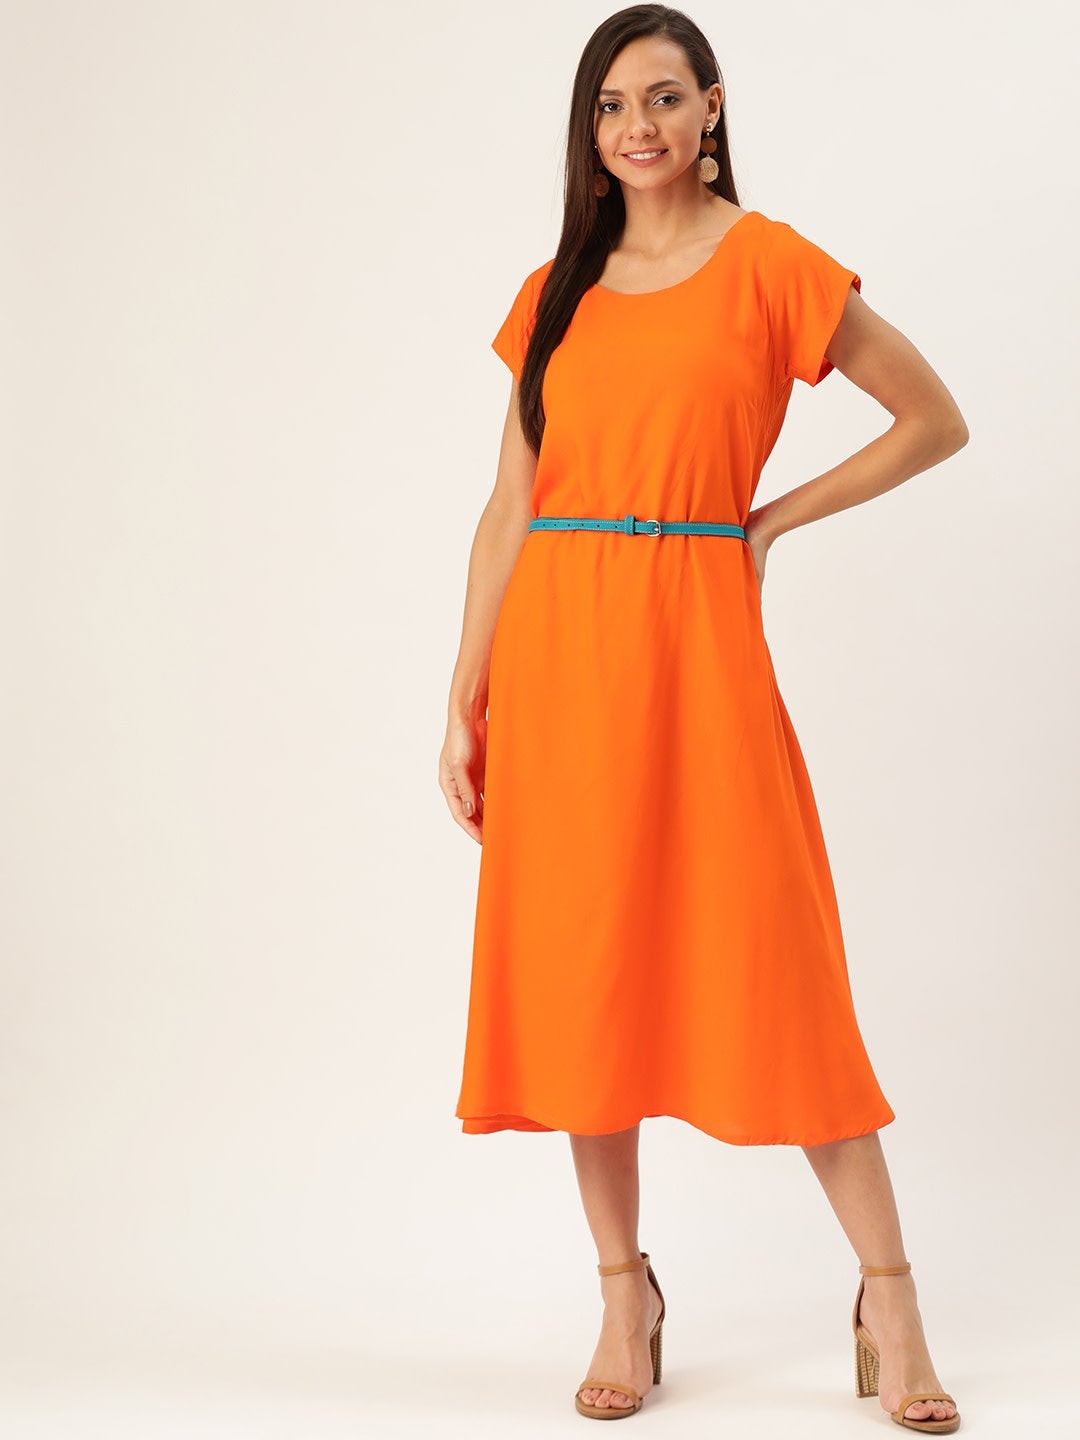 Women's Orange Dress Aqua Belt - InWeave